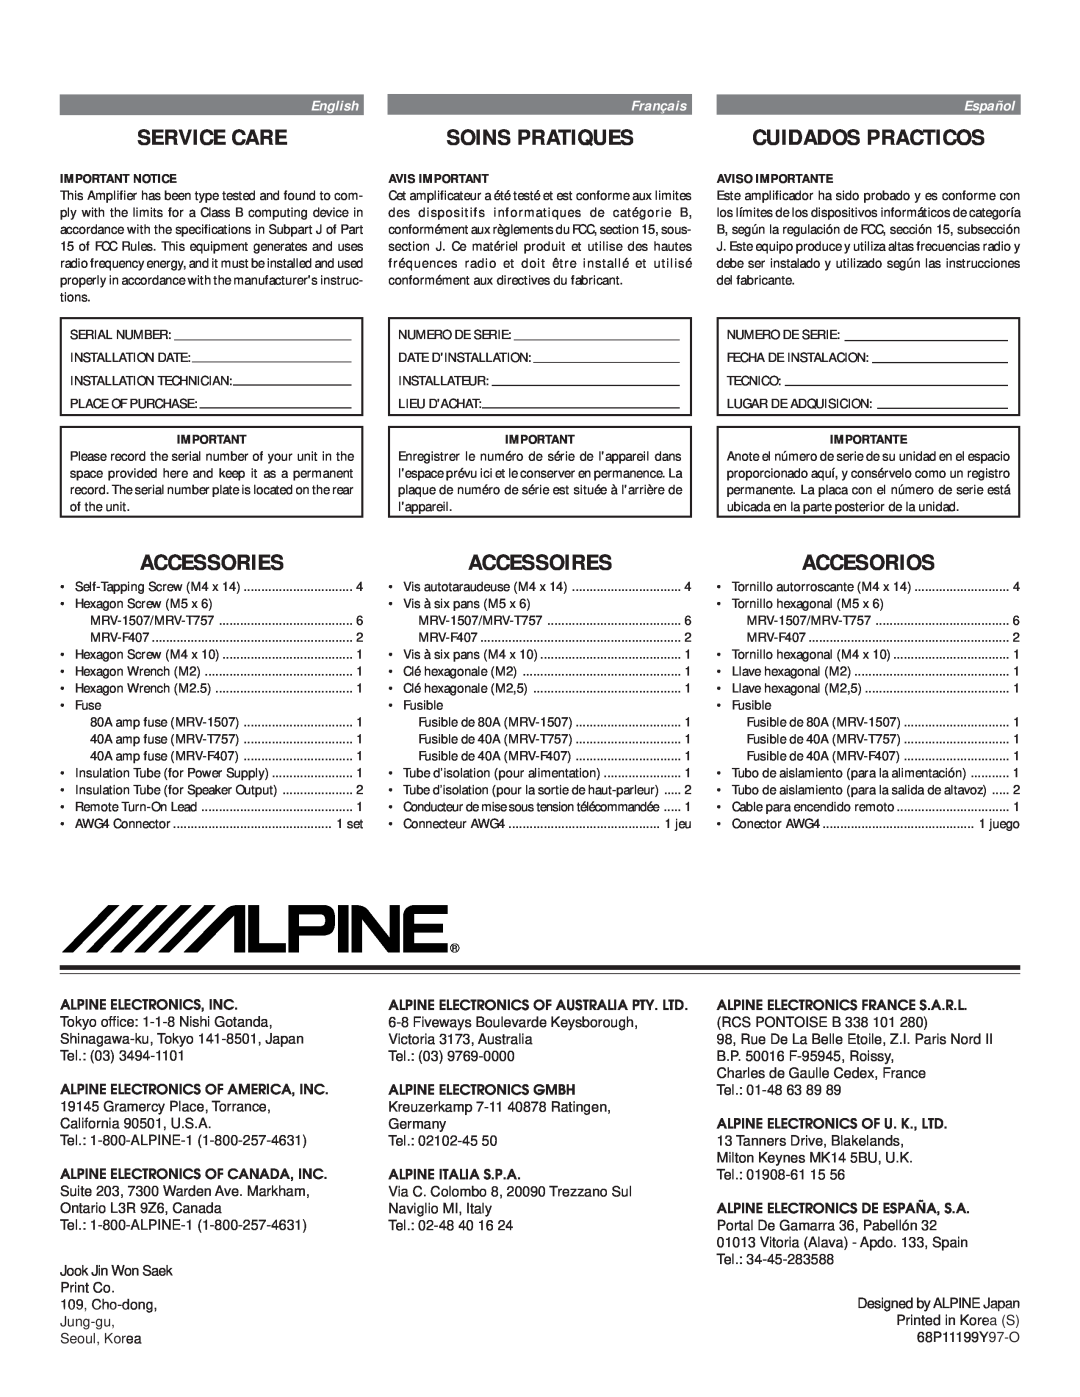 Alpine MRV-F407 Service Care, Soins Pratiques, Cuidados Practicos, Accessories, Accessoires, Accesorios, English, Français 